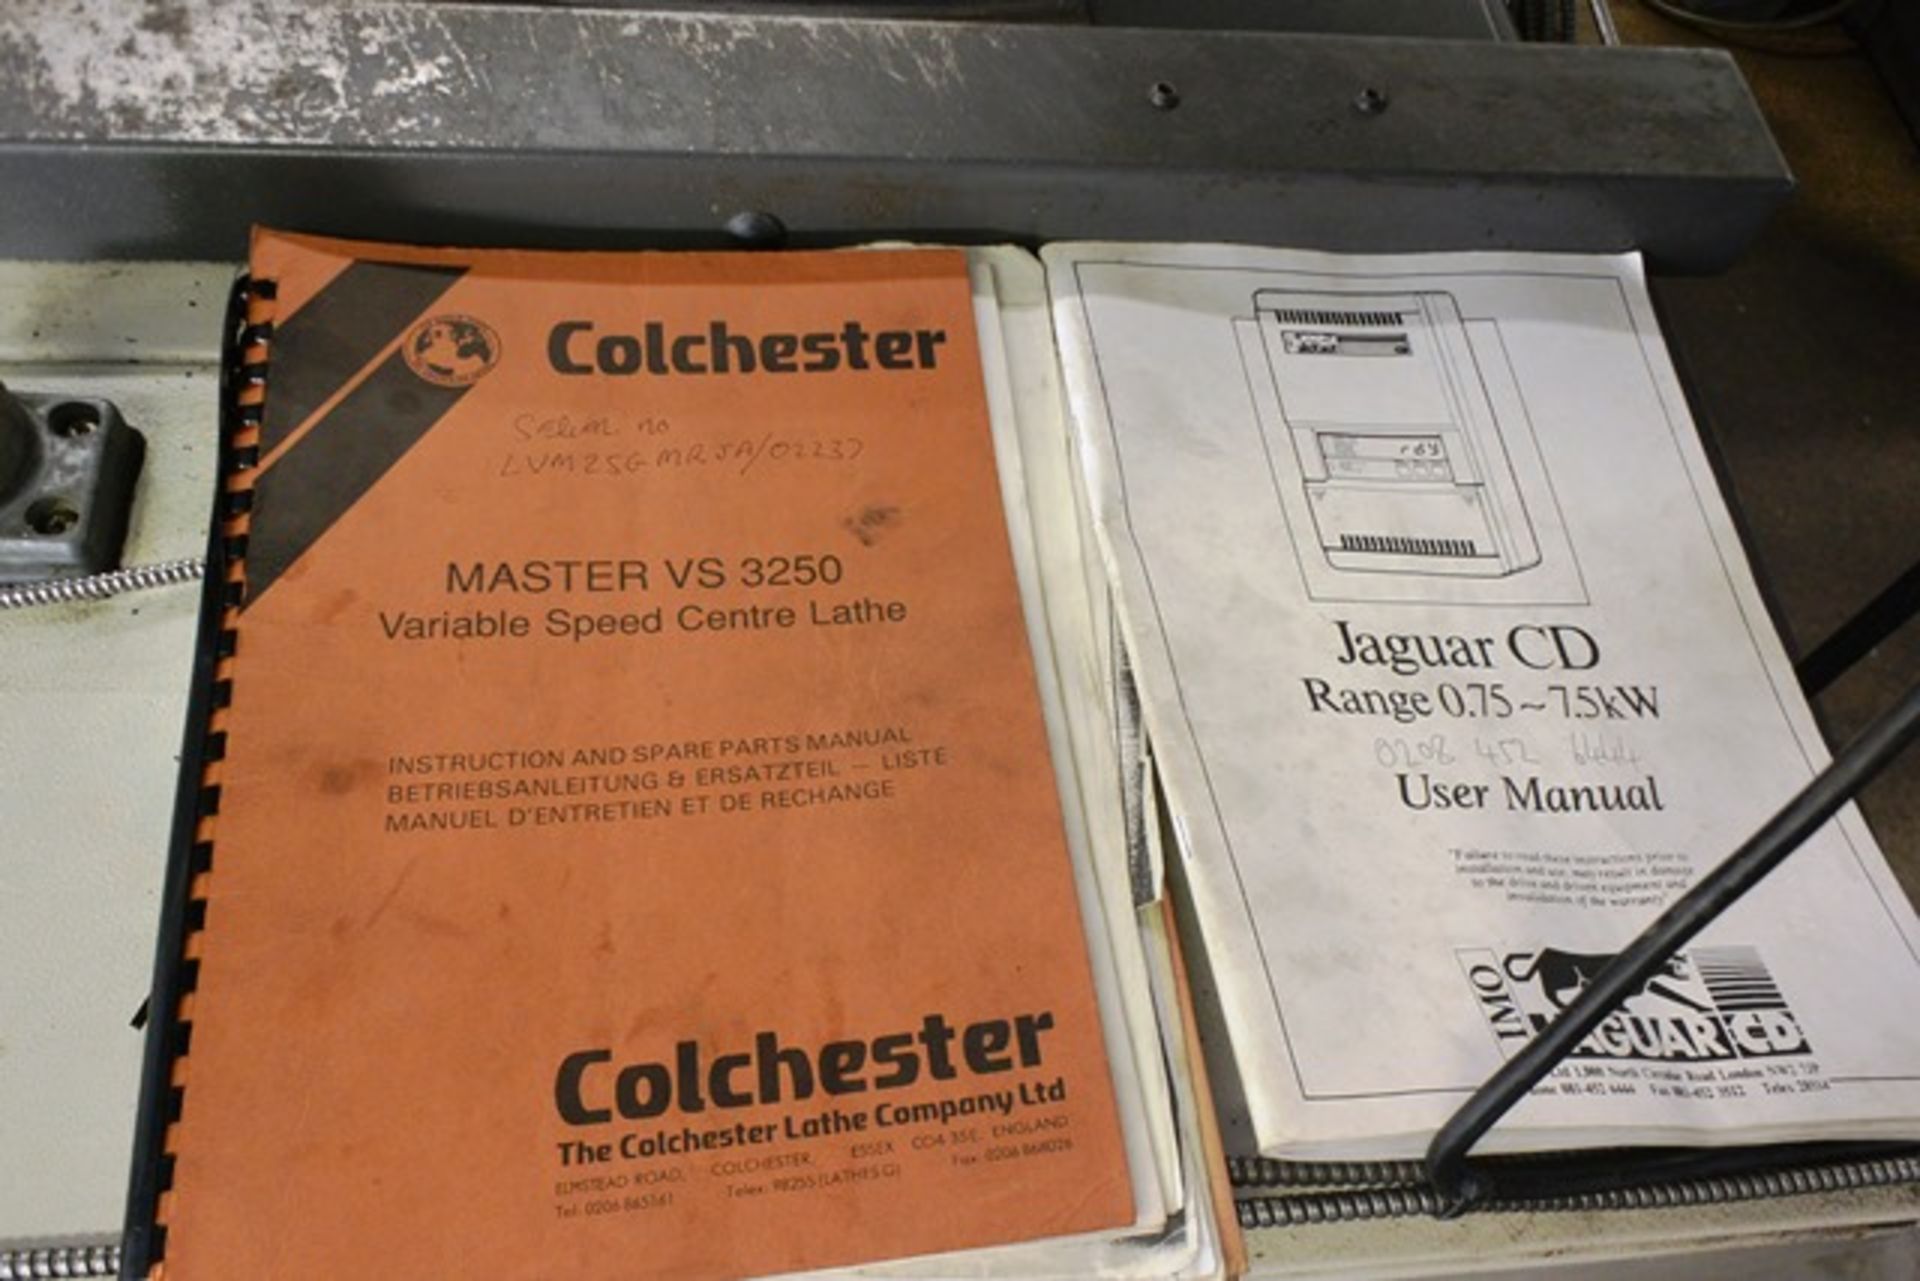 Colchester Master V5 3250 variable speed centre lathe, serial no. LVM 250 MRJA/02237 swing over bed: - Image 7 of 9